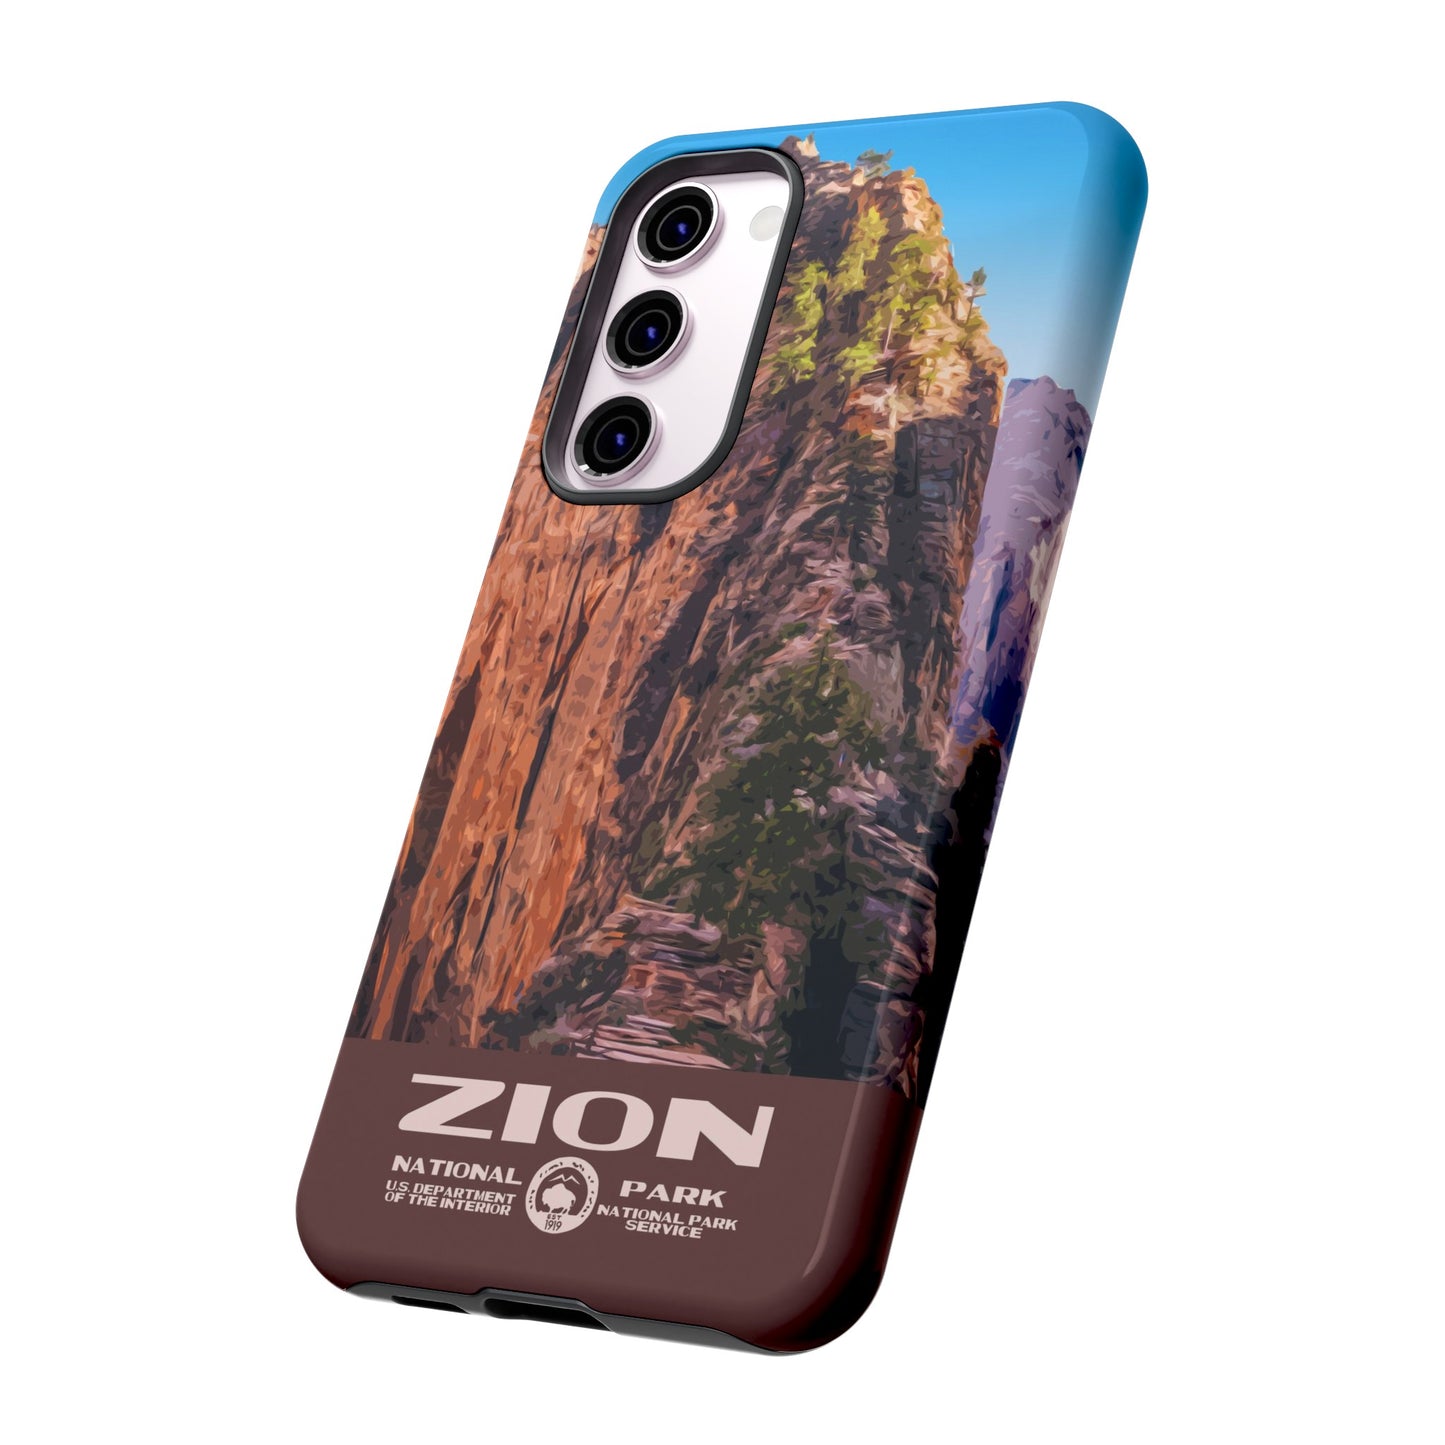 Zion National Park Phone Case - Angels Landing Trail